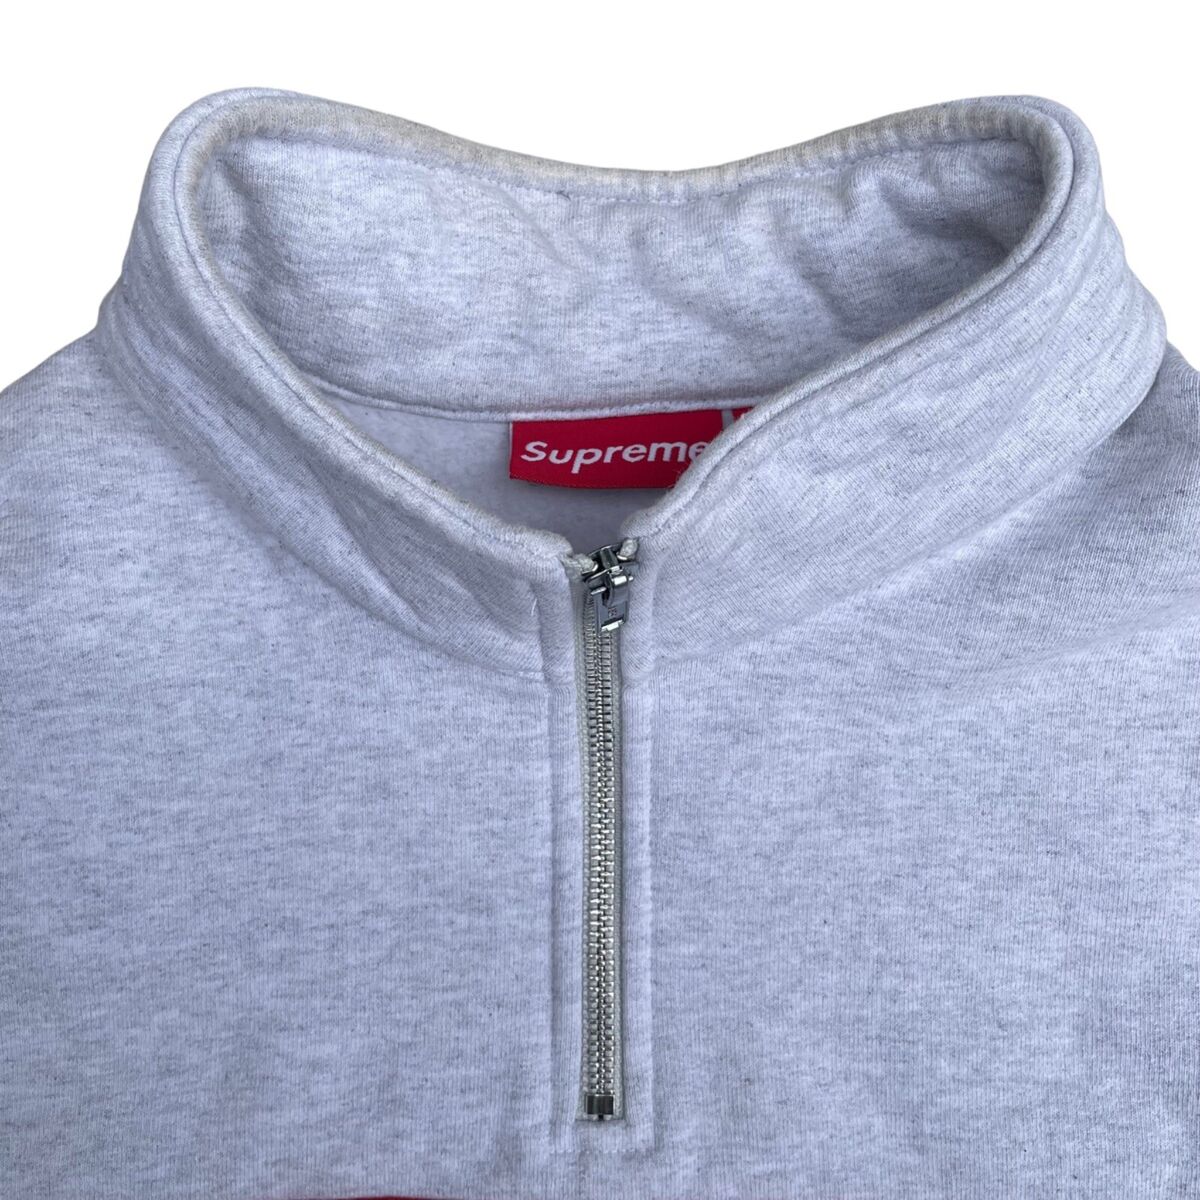 Supreme Quarter Half Zip Sweater Two Tone Size Large | eBay